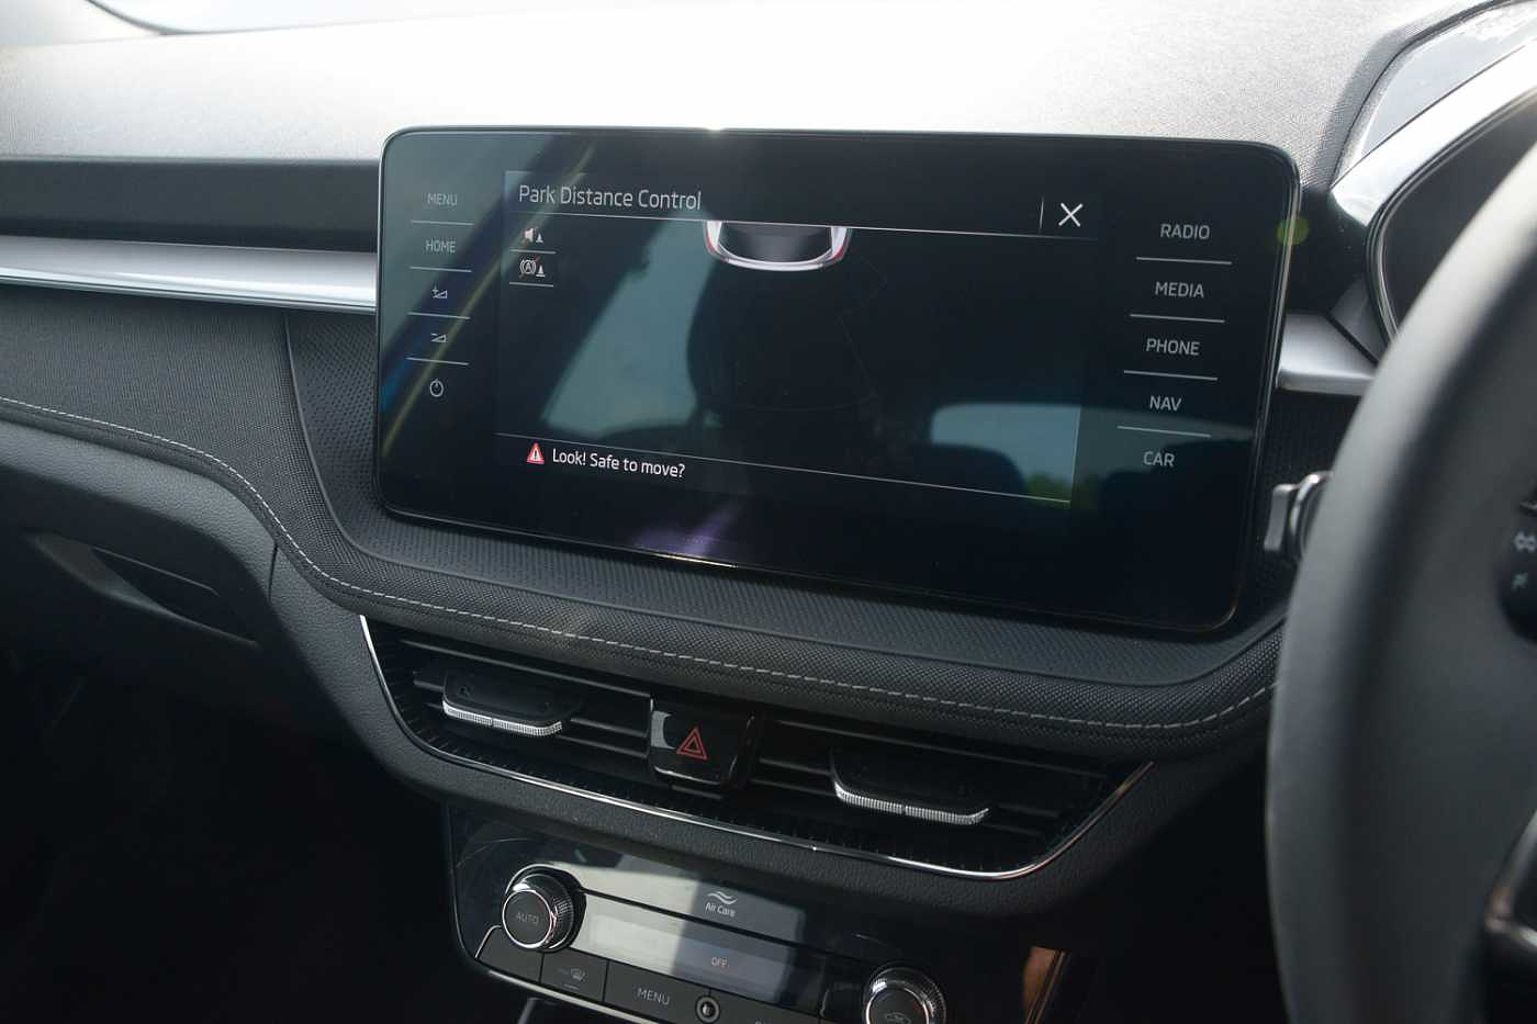 SKODA Fabia 1.0 TSI (110ps) SE L DSG 5-Dr Hatchback